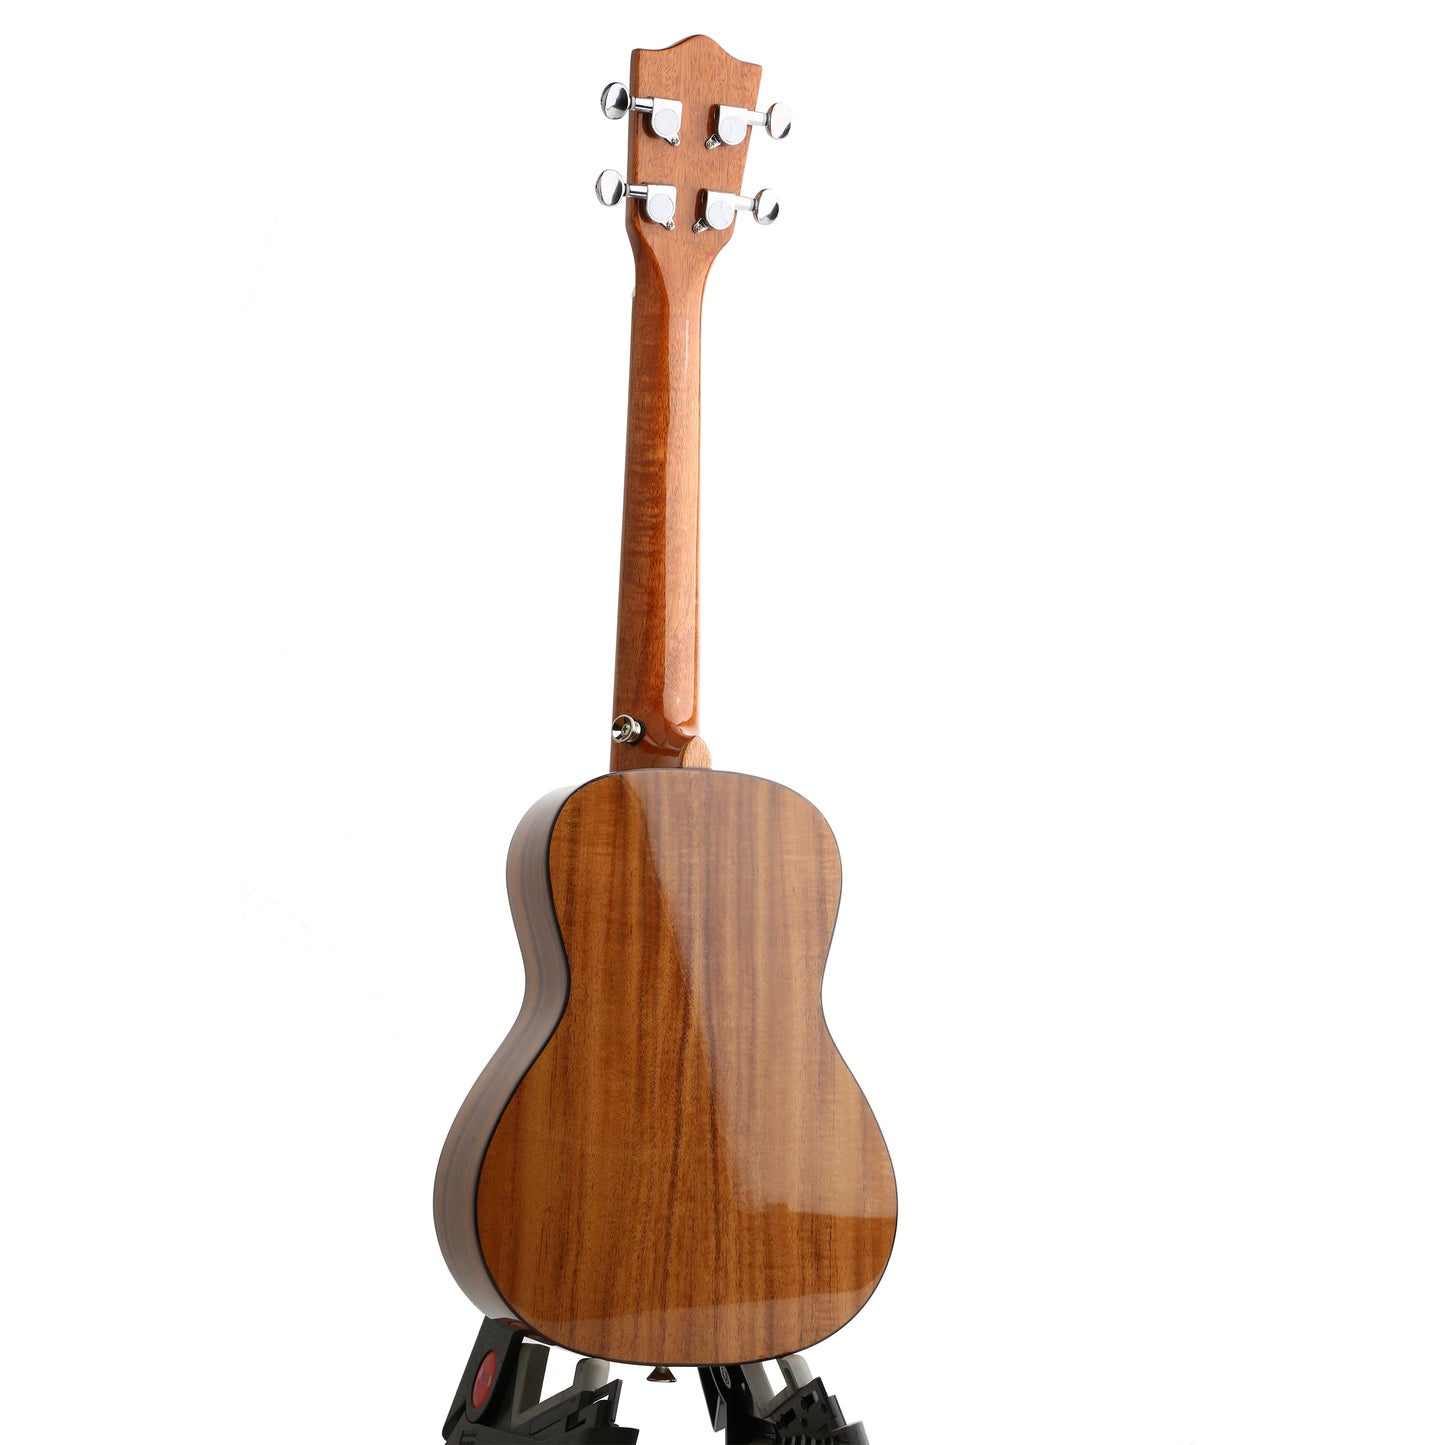 Kalena Concert Longneck Solid Acacia Top Ukulele with Maple binding Complete Set: Strings, Picks, Strap, Digital Tuner, Padded Case, Starter Guide